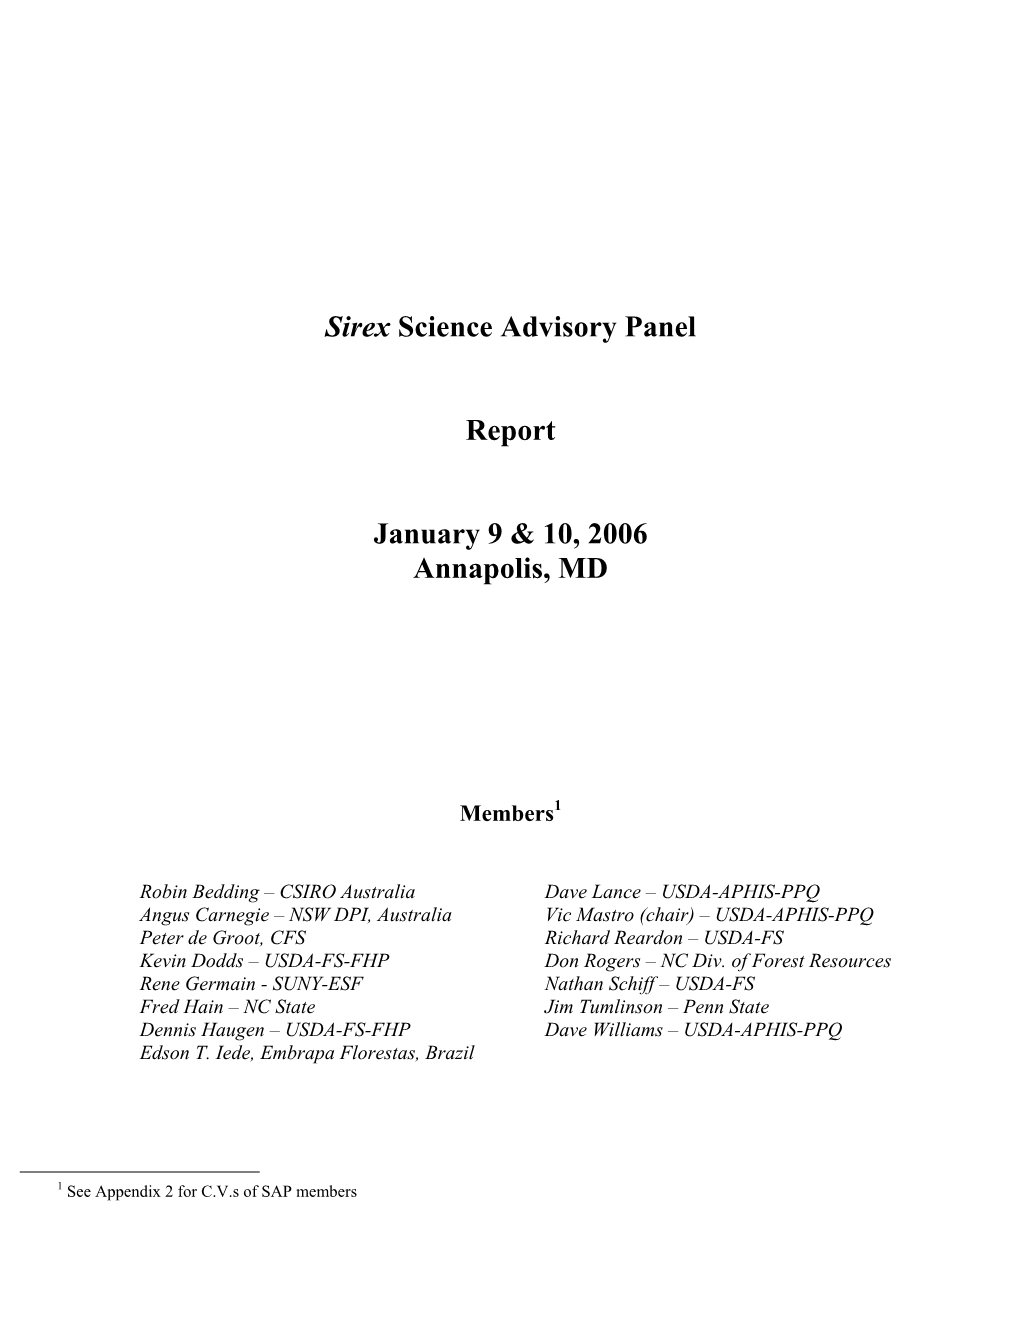 Sirex Science Advisory Panel Report January 9 & 10, 2006